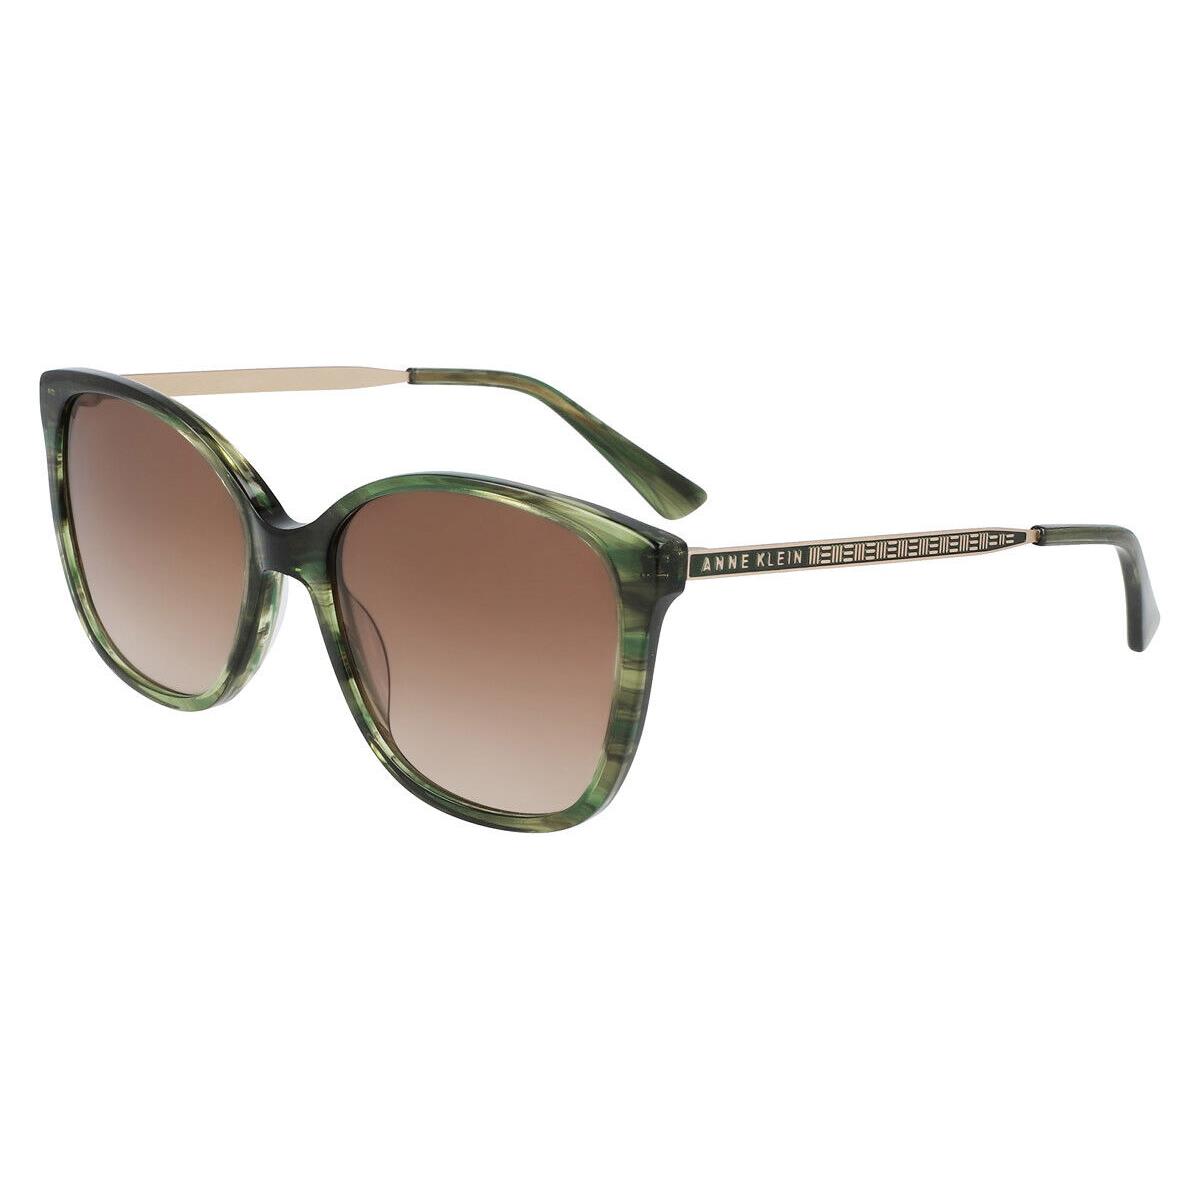 Anne Klein AK7079 Sunglasses Women Olive Horn Butterfly 54mm